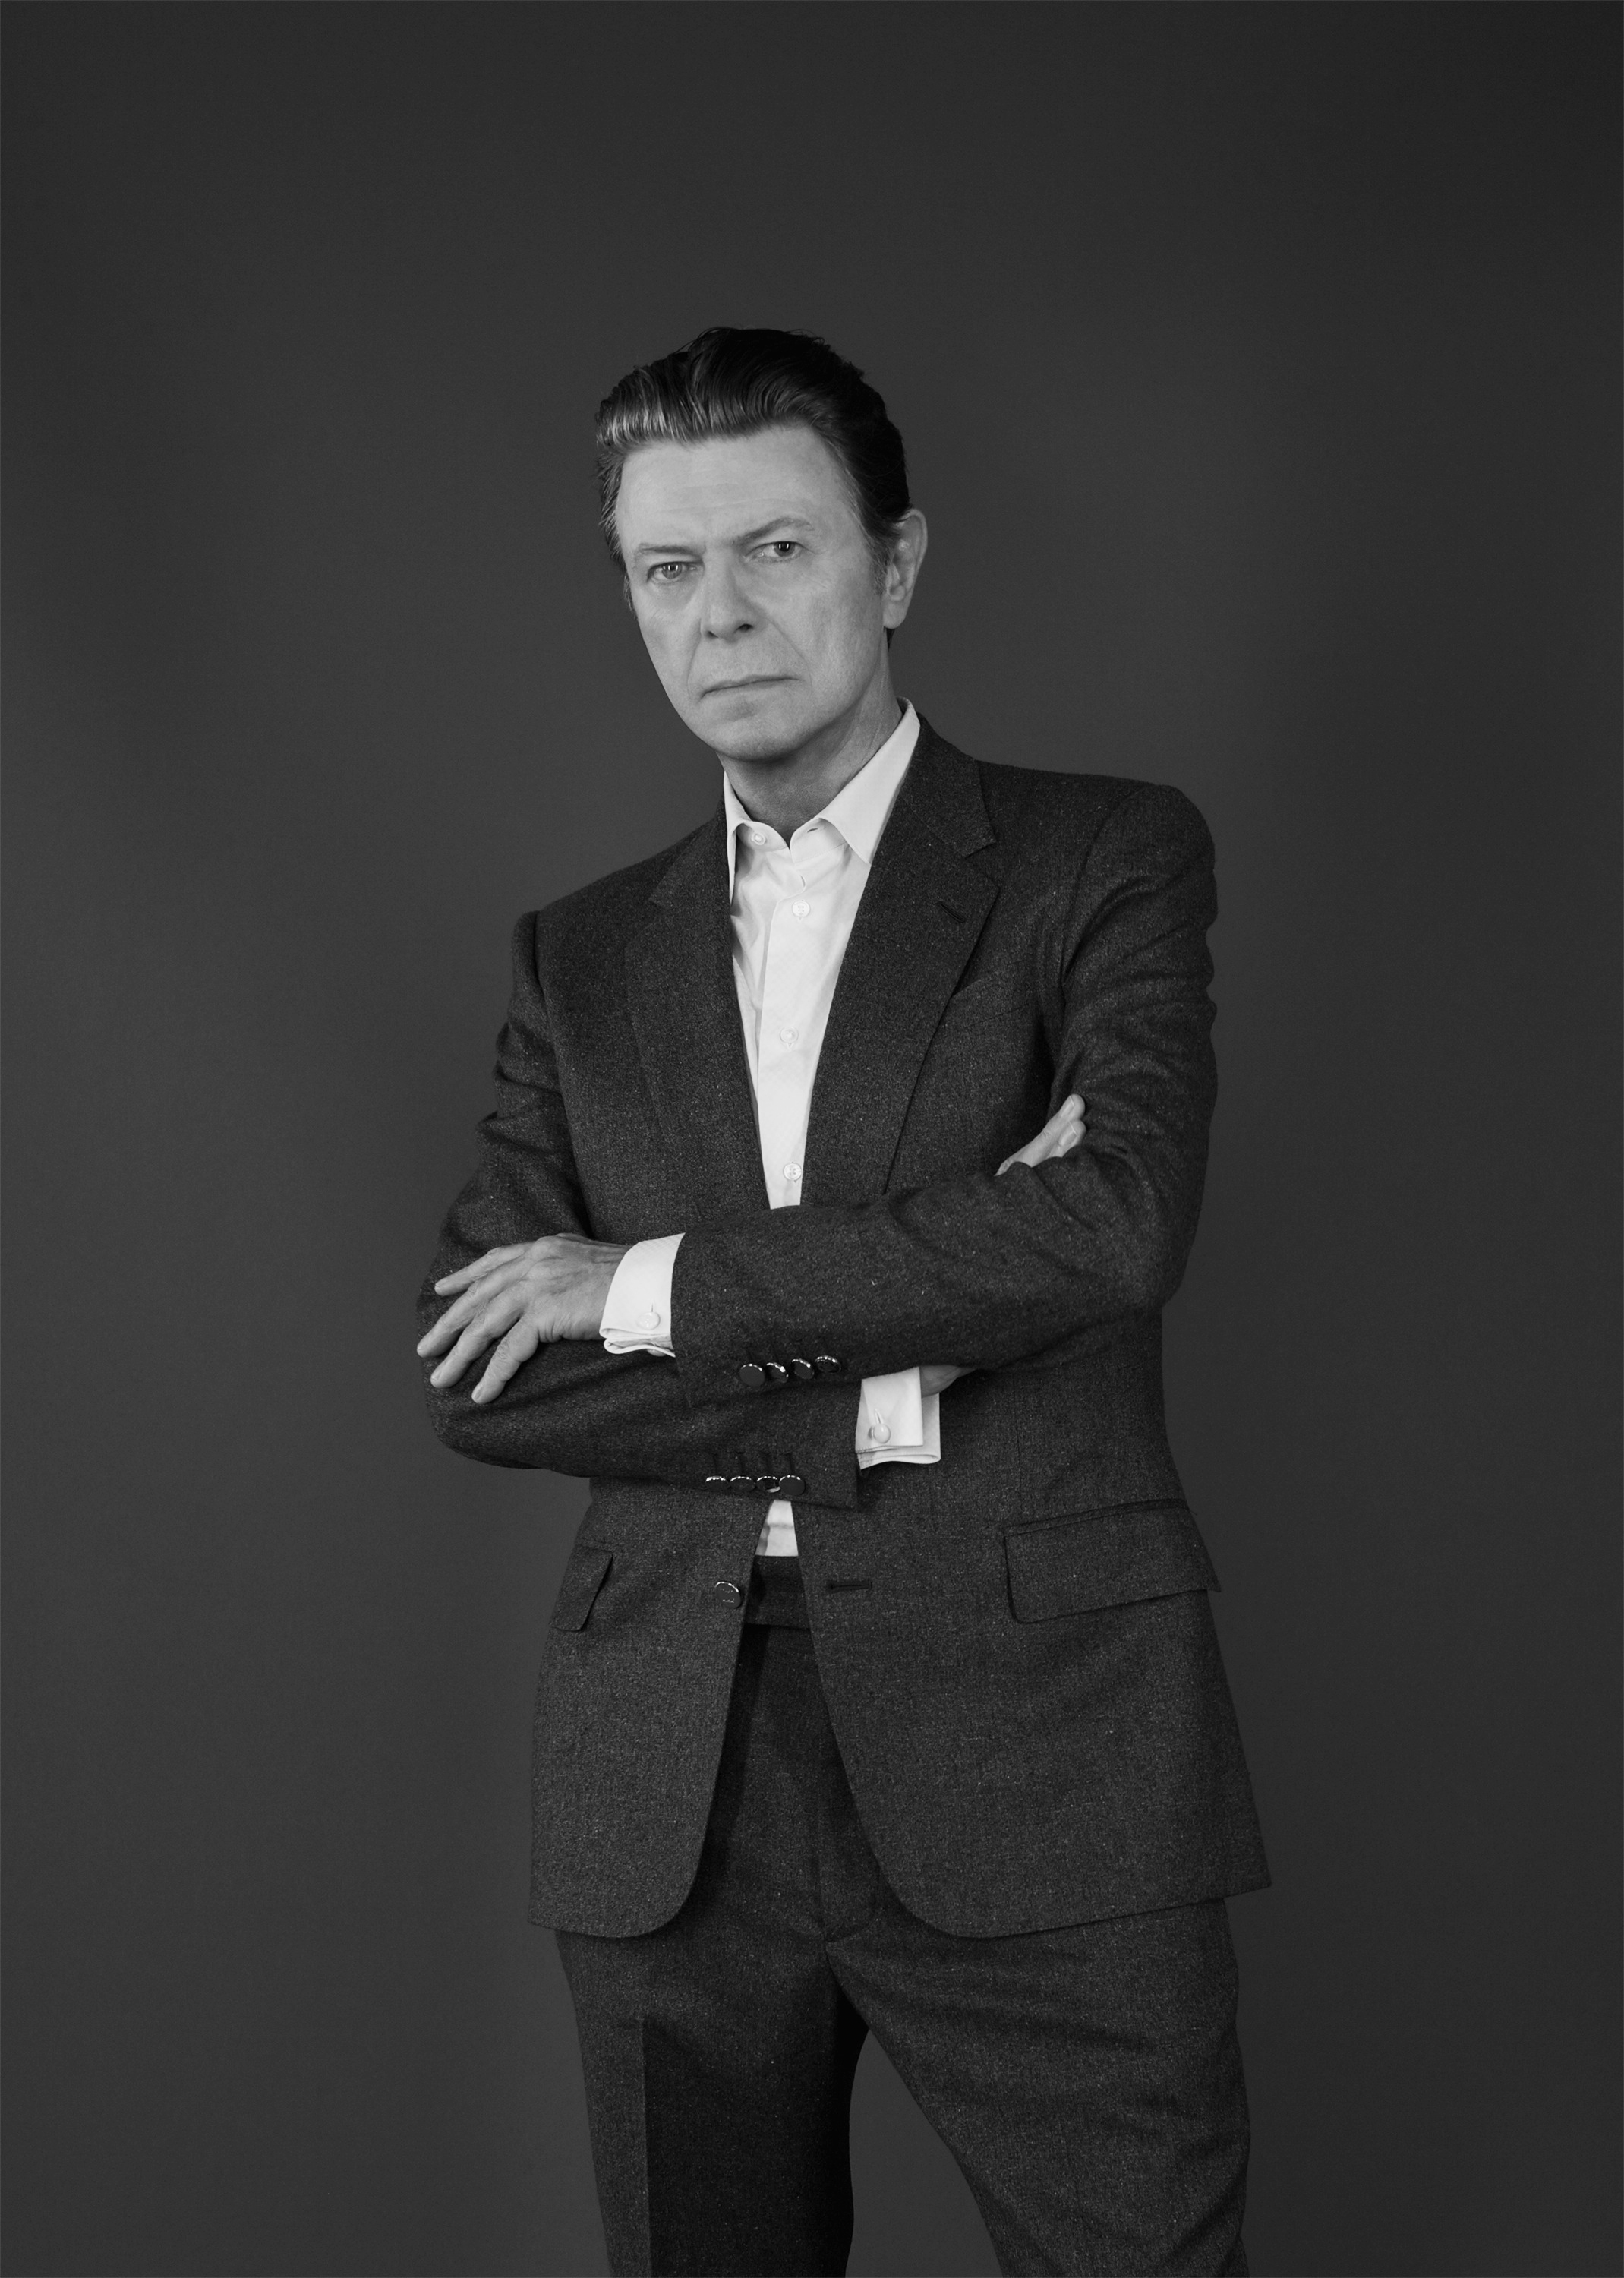 David Bowie in 2015.